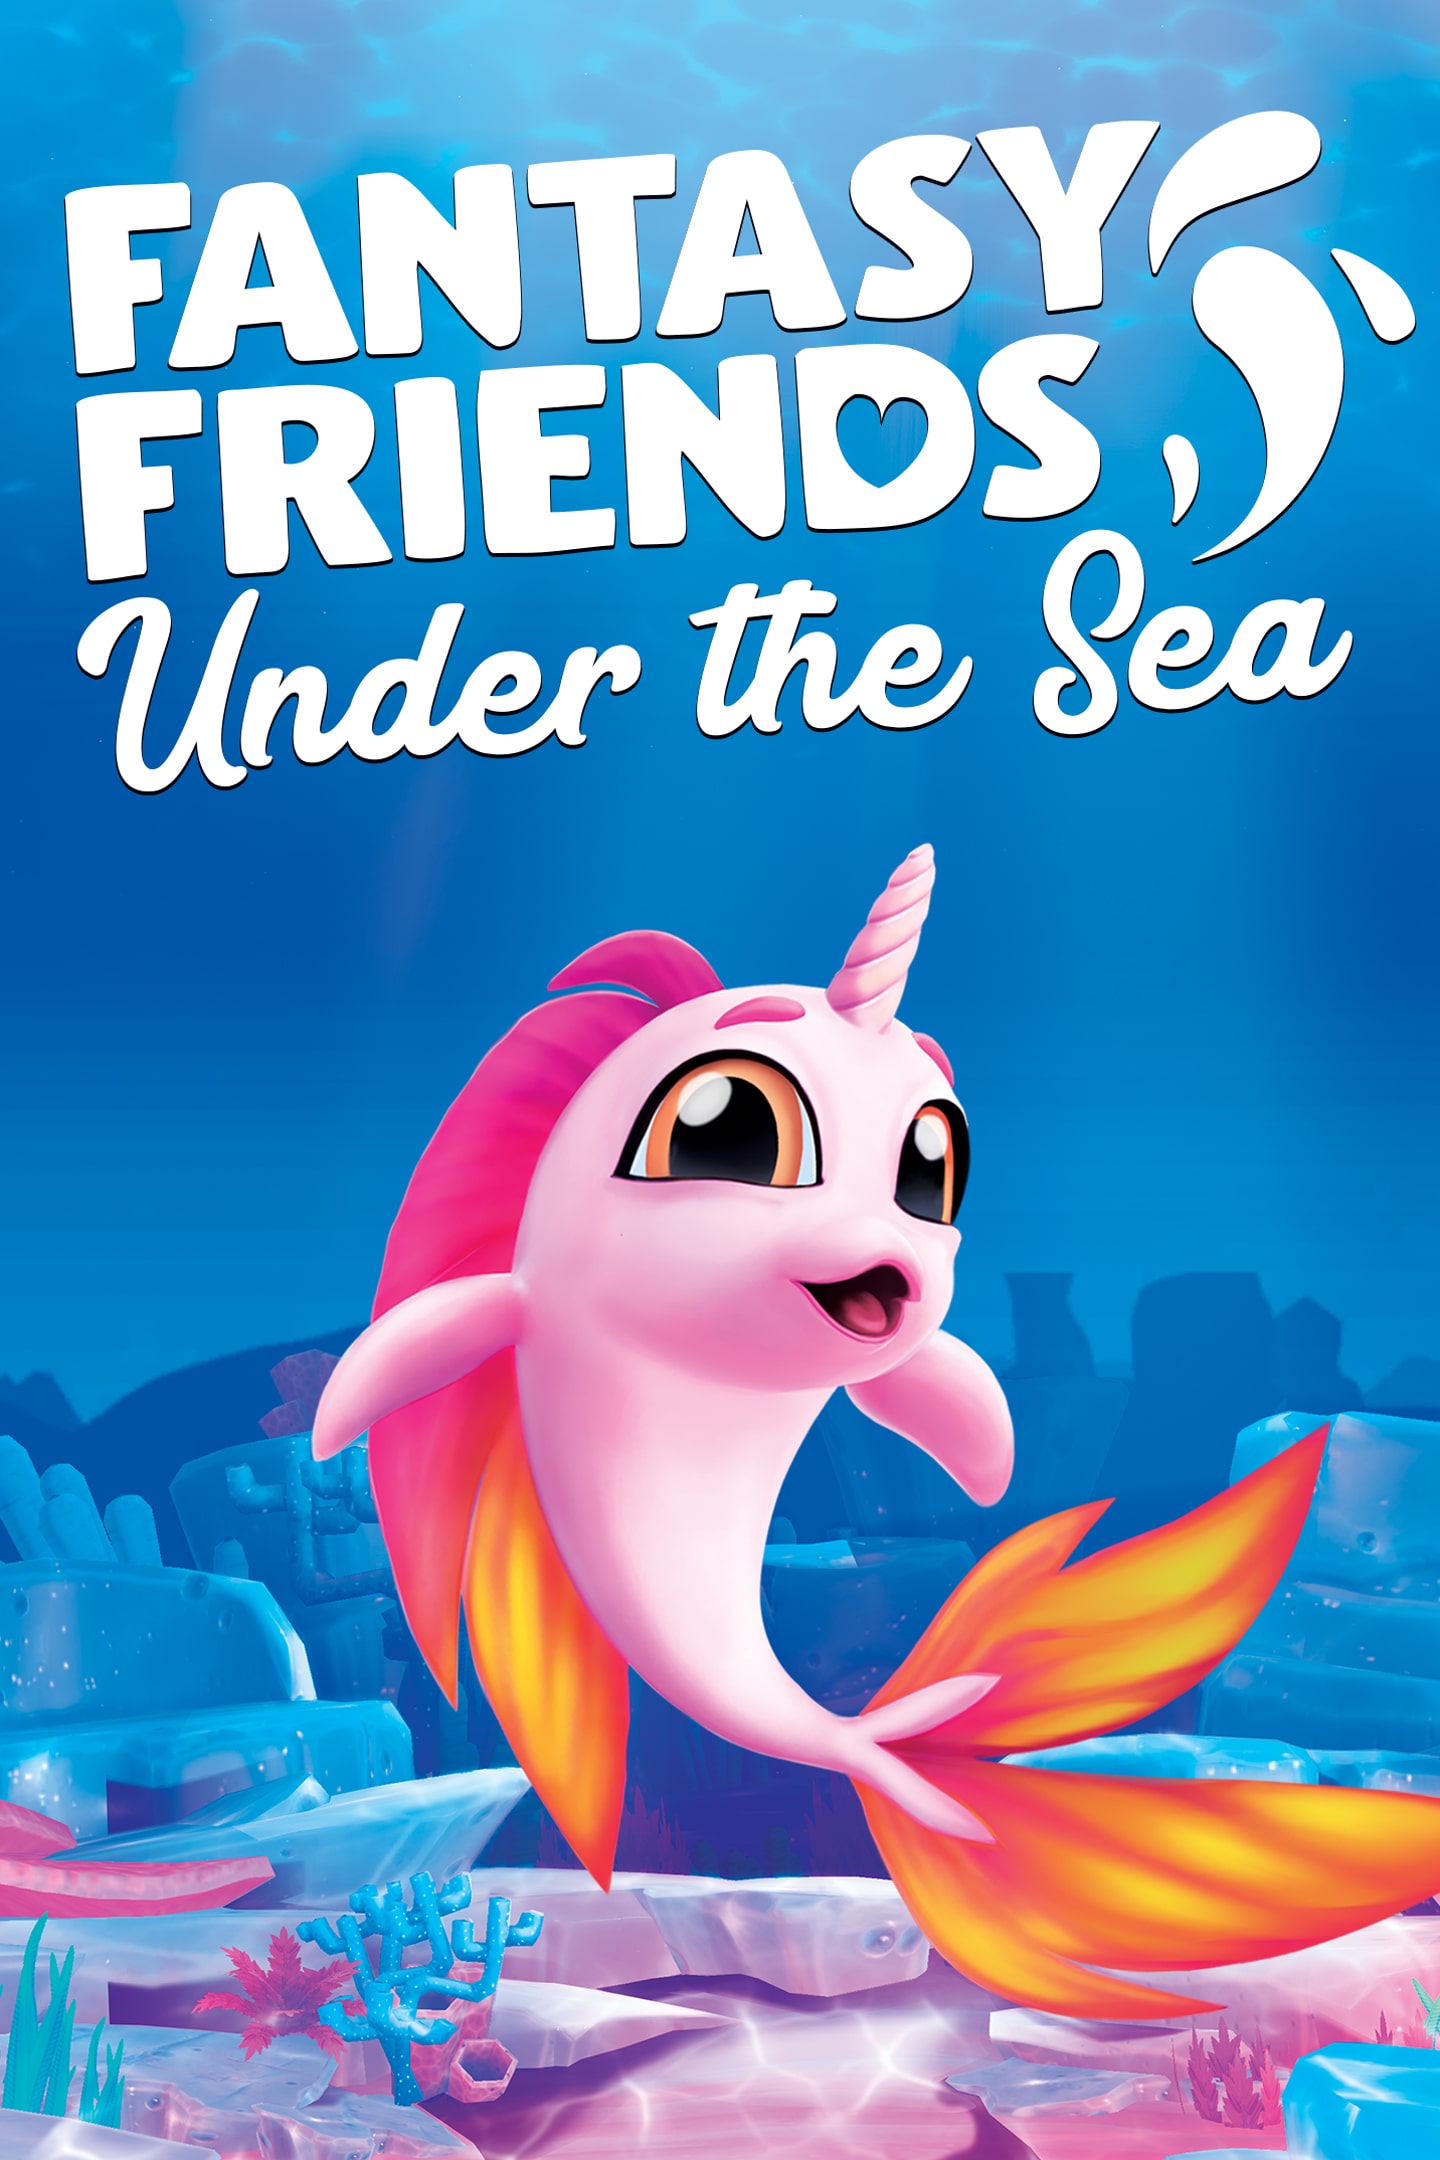 Under friends. SW Fantasy friends - under the Sea.